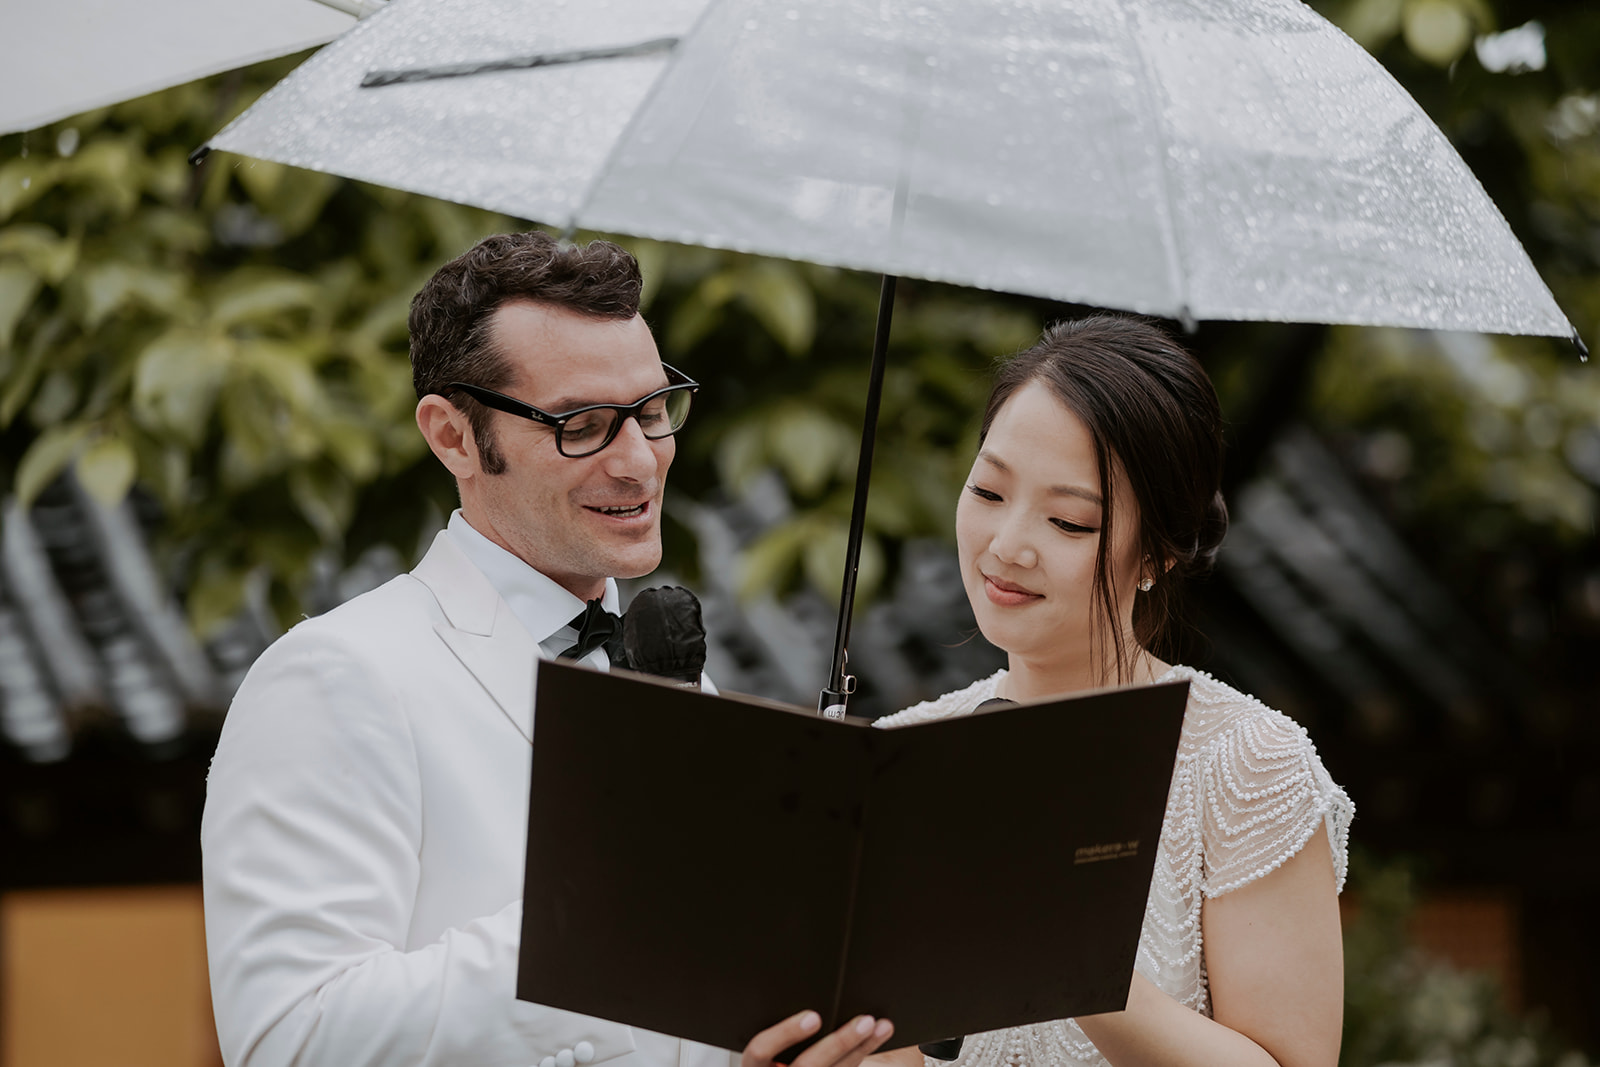 A hanok wedding ceremony where the bride and groom exchange heartfelt vows under a beautifully decorated umbrella.